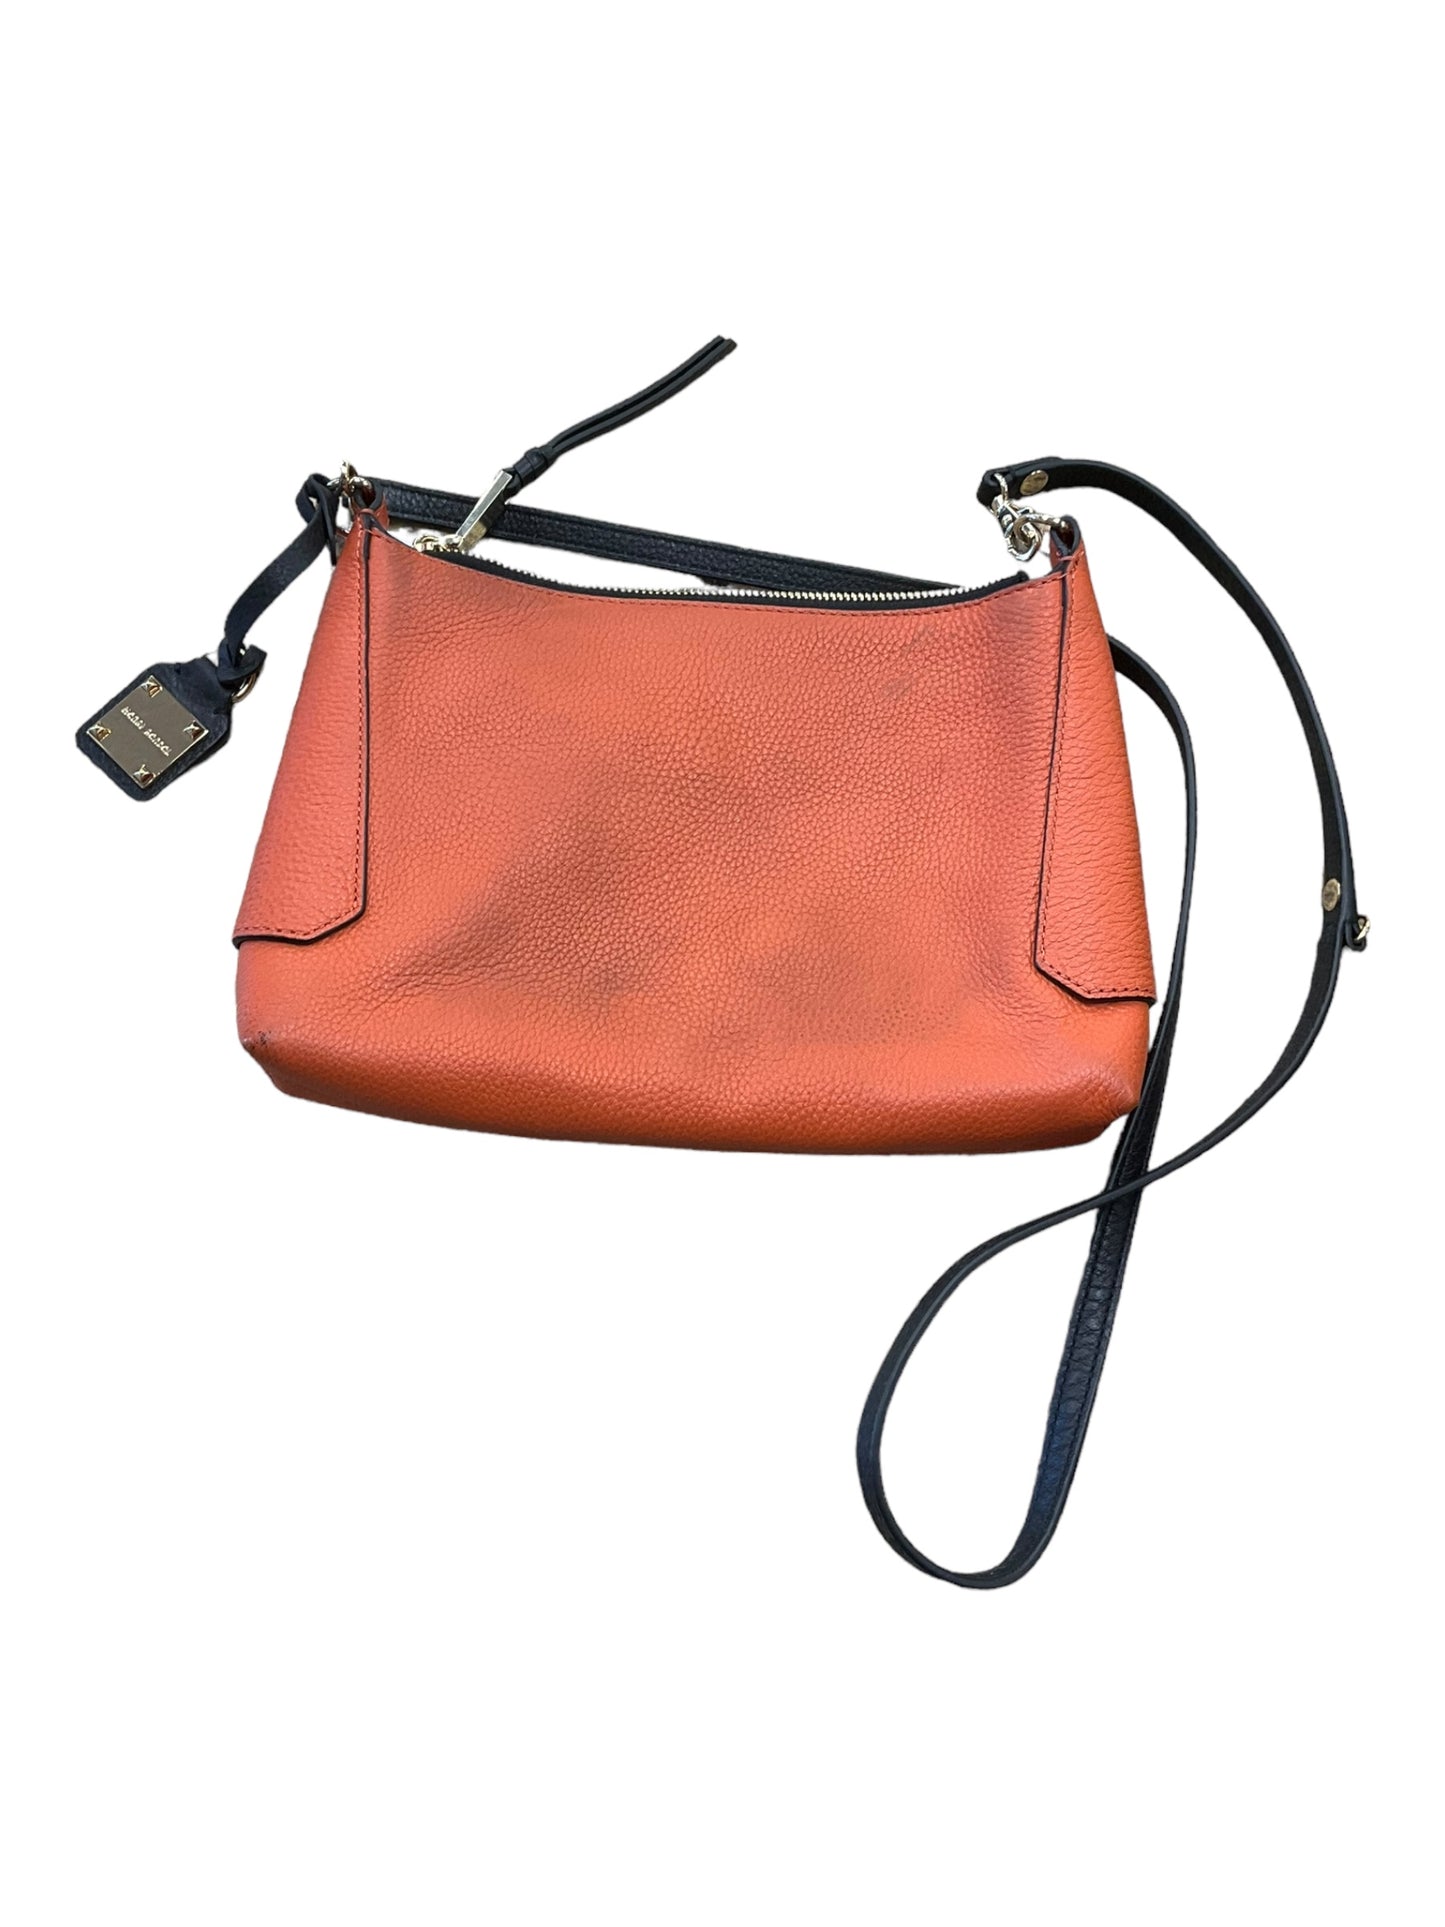 Handbag Designer By Henri Bendel  Size: Small